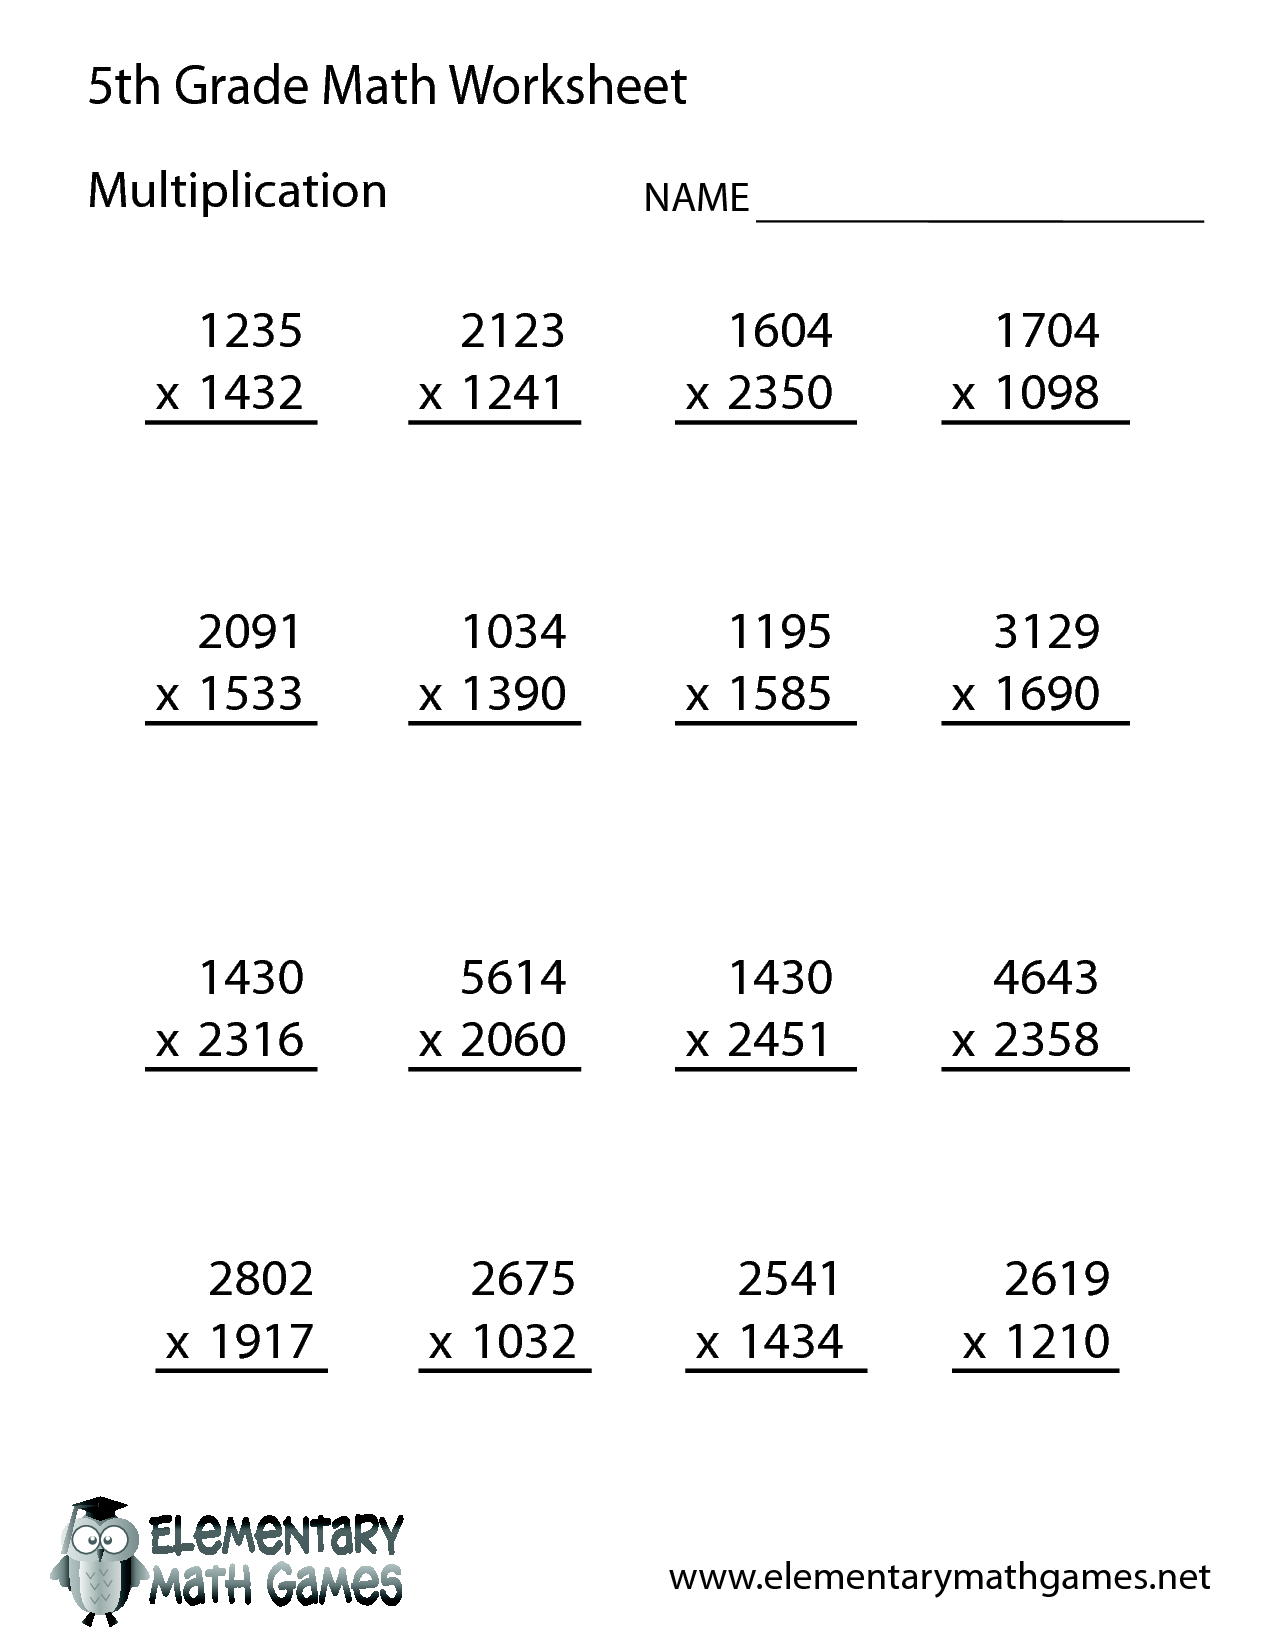 5th Grade Math Practice Multiplication MySchoolsMath